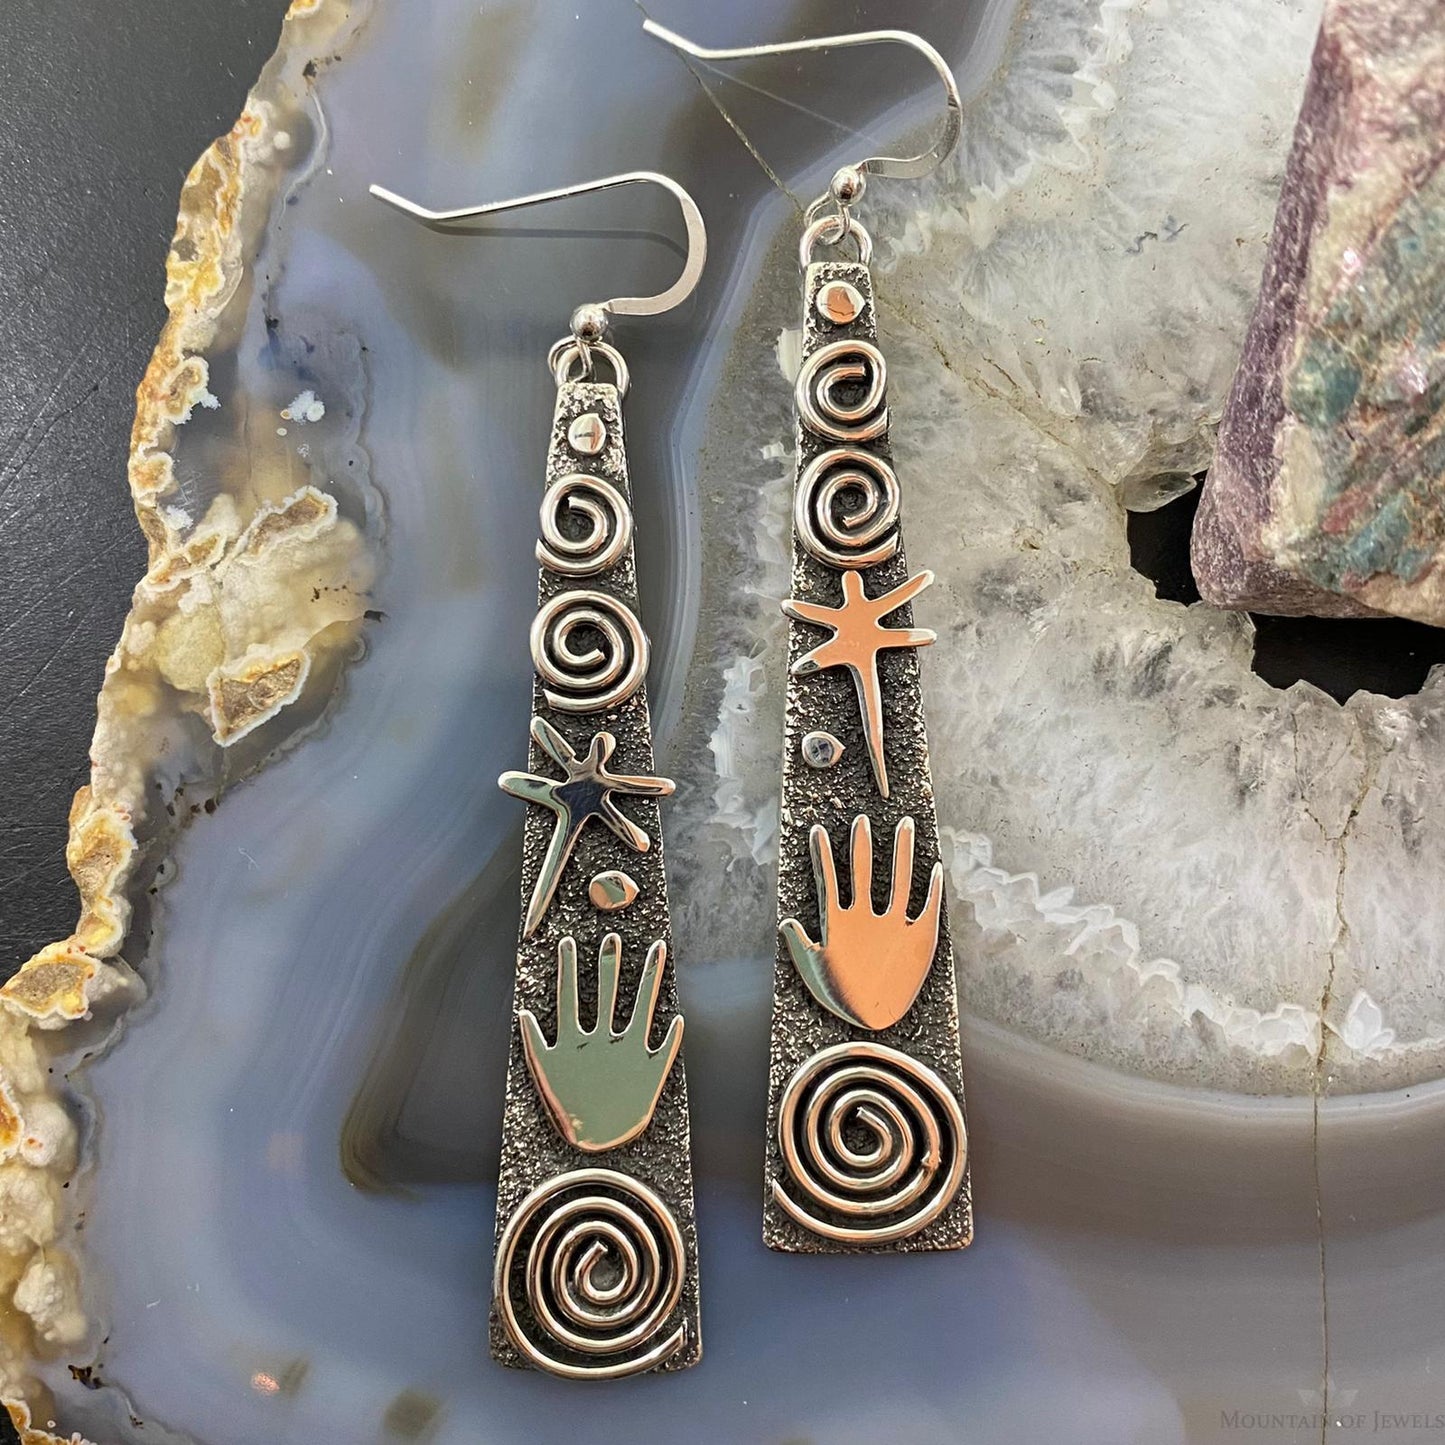 Alex Sanchez Native American Sterling Silver Tipi Petroglyph Dangle Earrings For Women #3